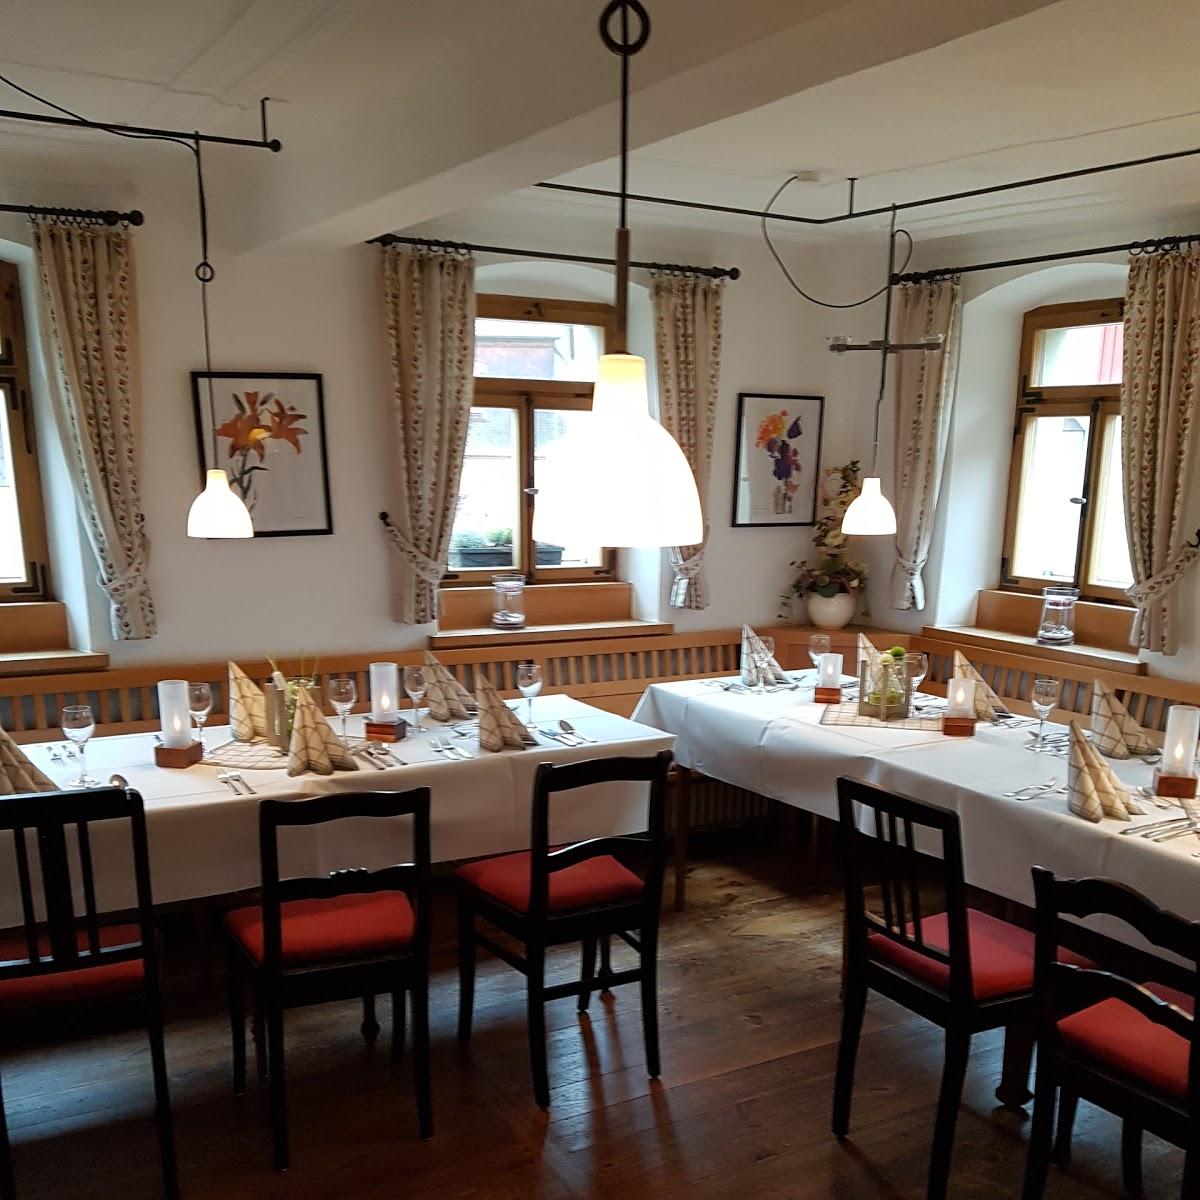 Restaurant "Hotel - Gasthof zur Sonne" in Hohenroth